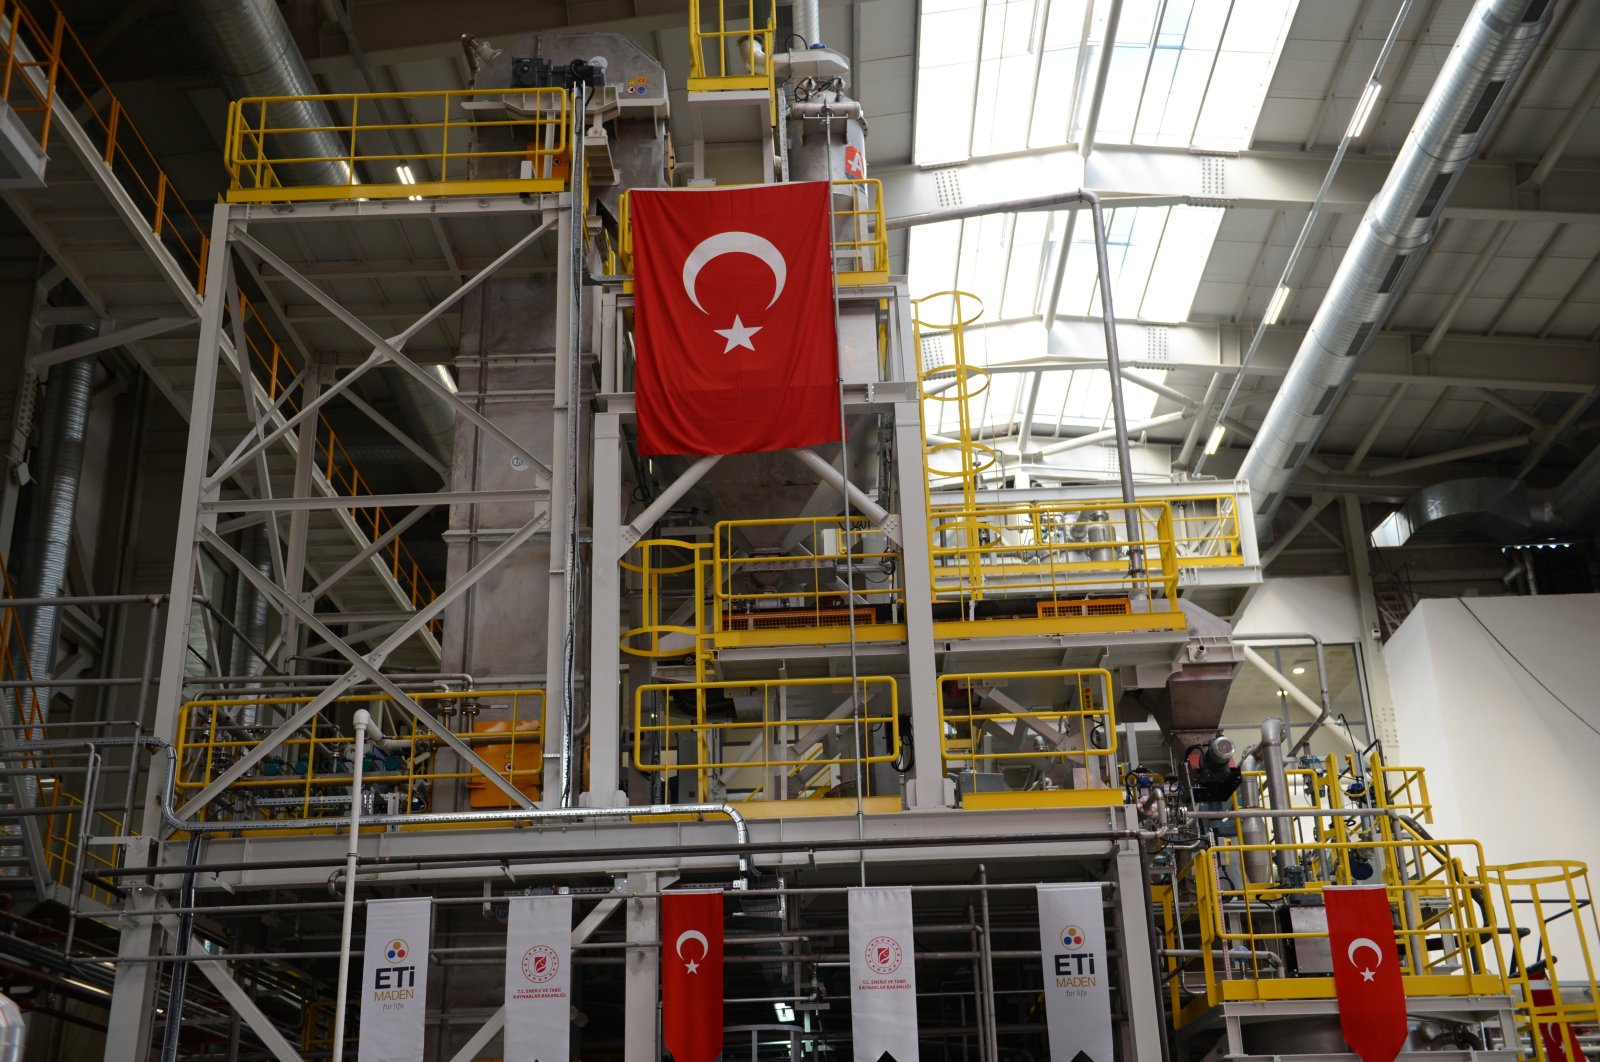 Turkish flag is seen during opening ceremony of Eti Maden Lithium Production facility, Eskişehir, central Türkiye, Dec. 29, 2020. (AA Photo)